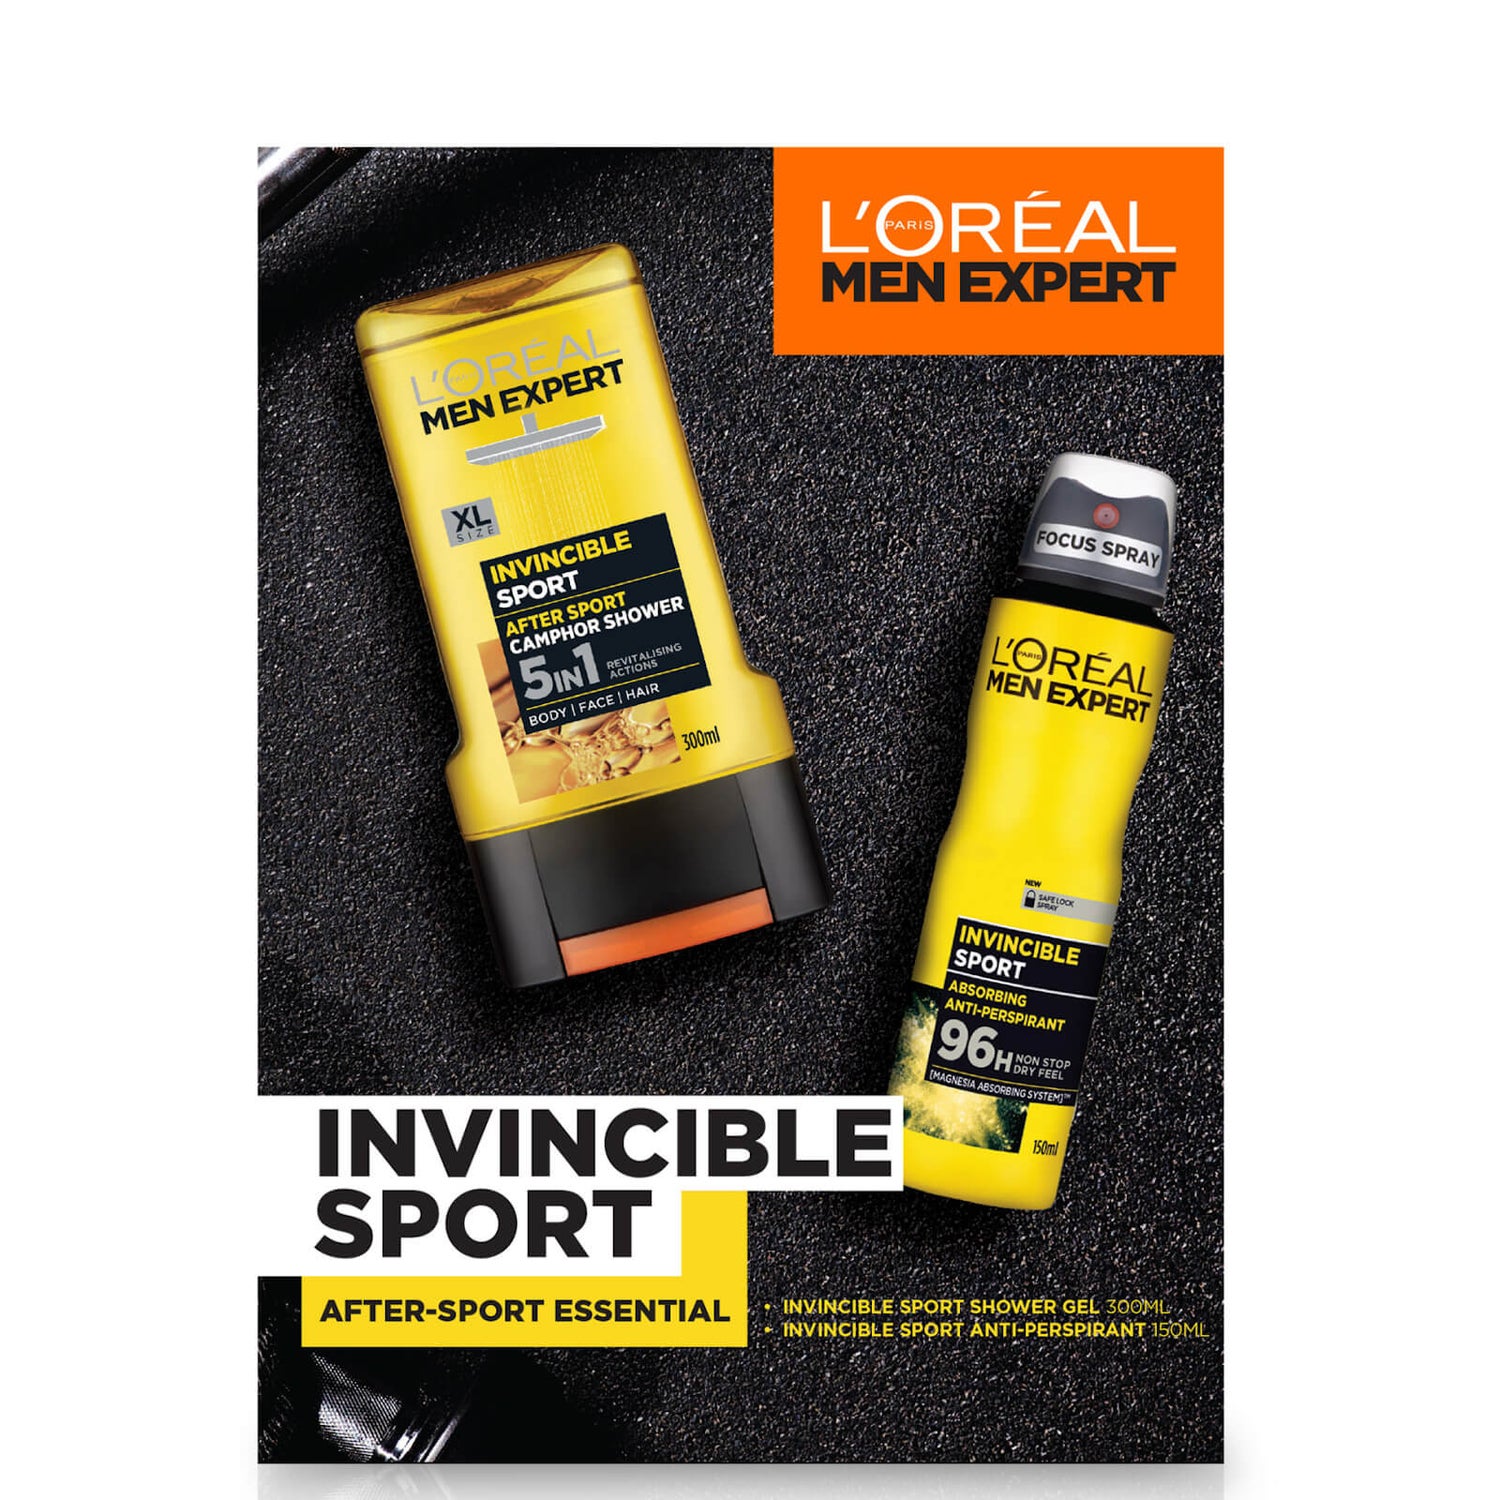 L'Oreal Men Expert Invincible Sport 2 Pieces Gift Set for Him